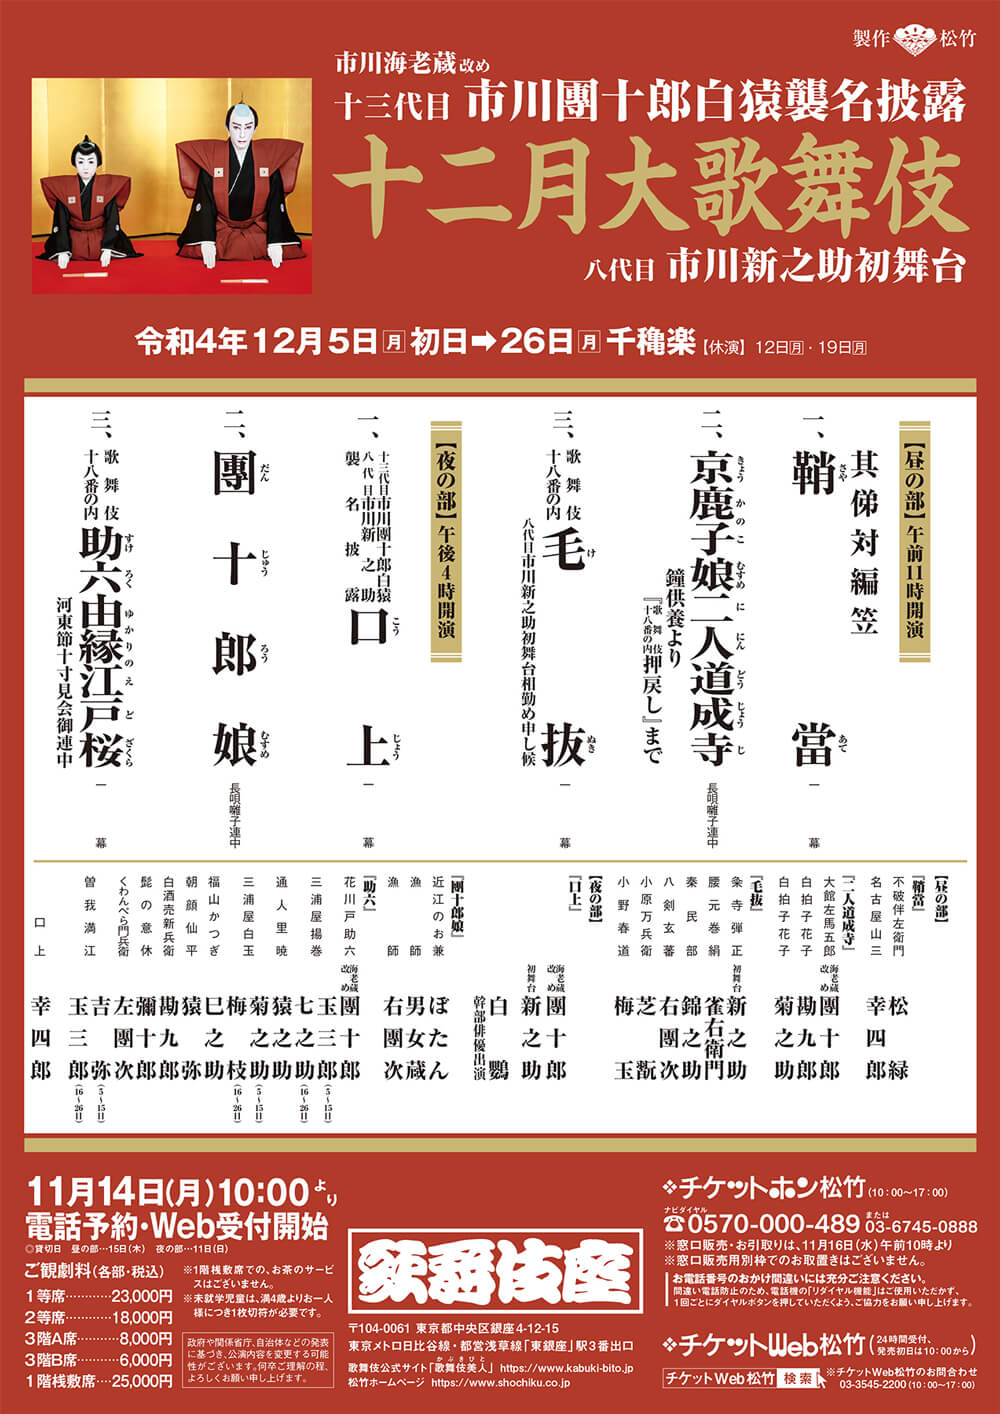 December Program at the kabukiza